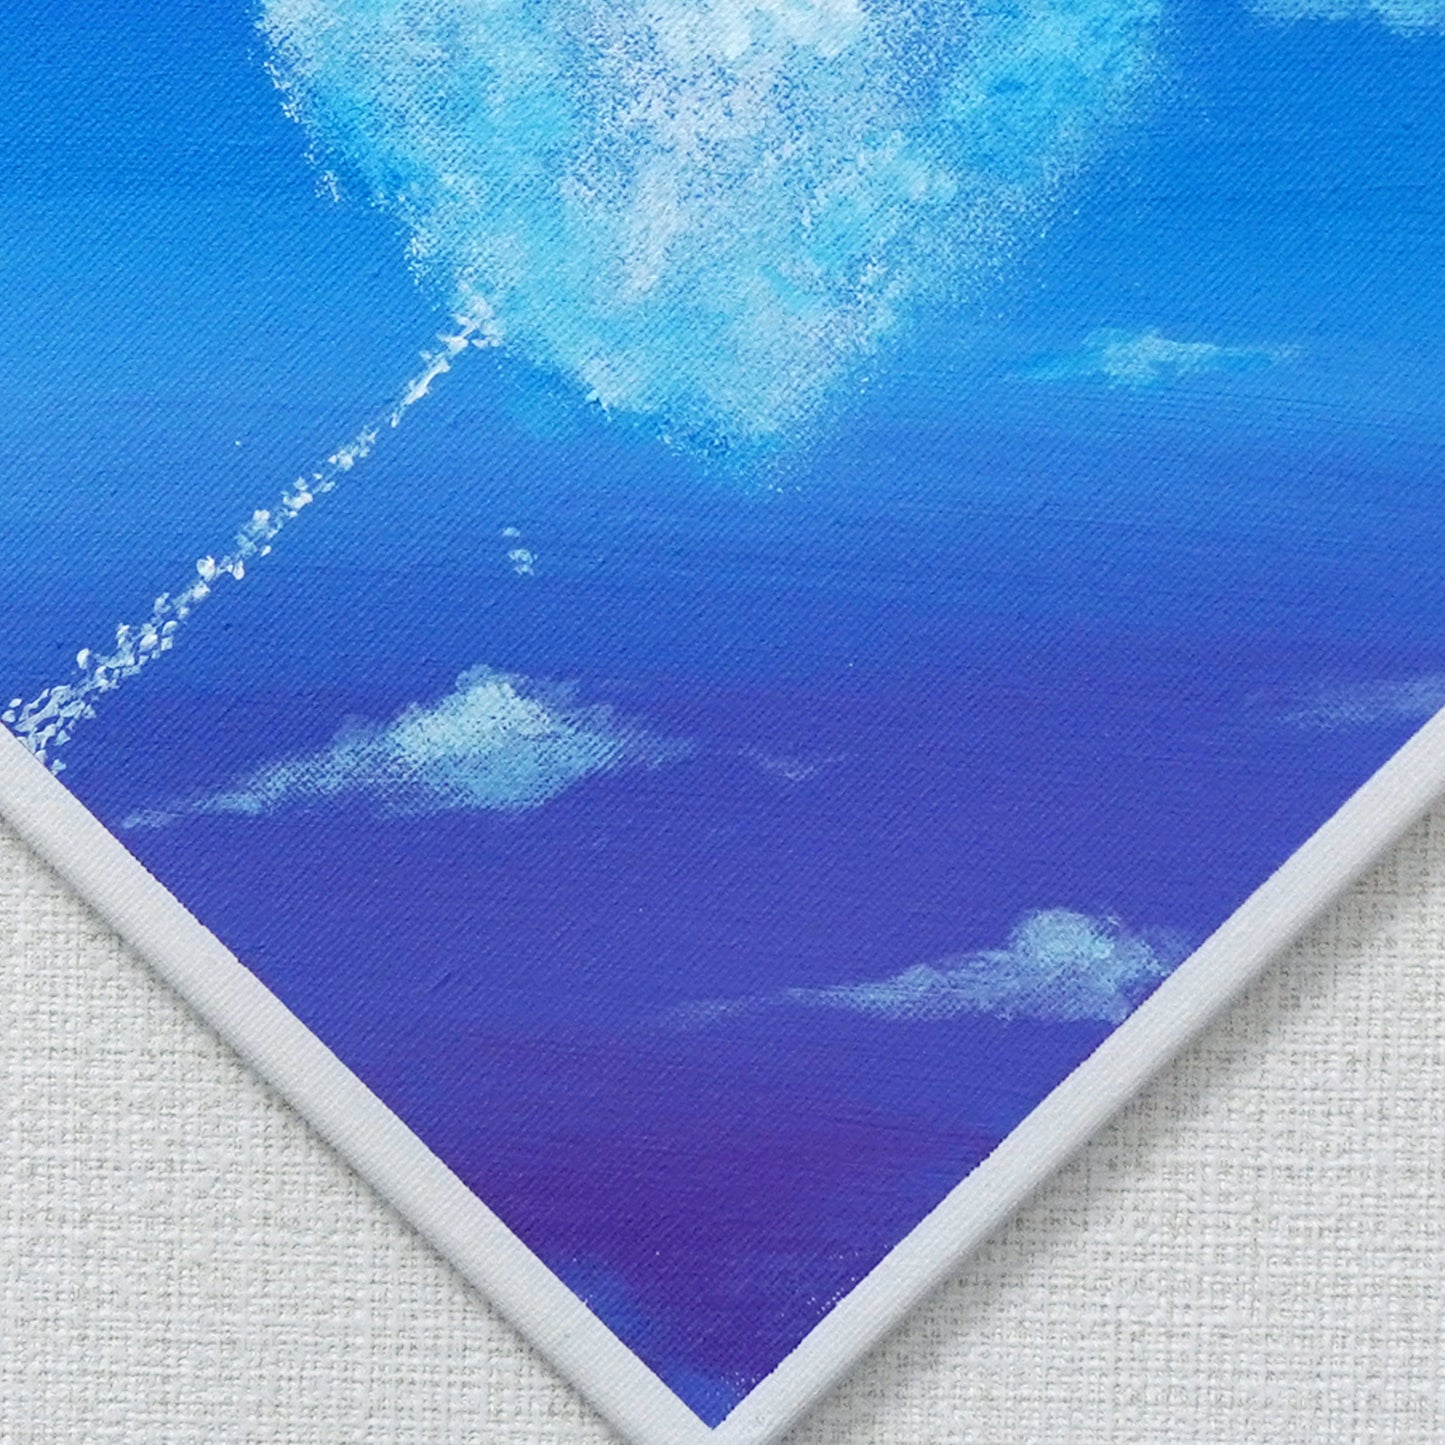 Heart shaped cloud - 10×10